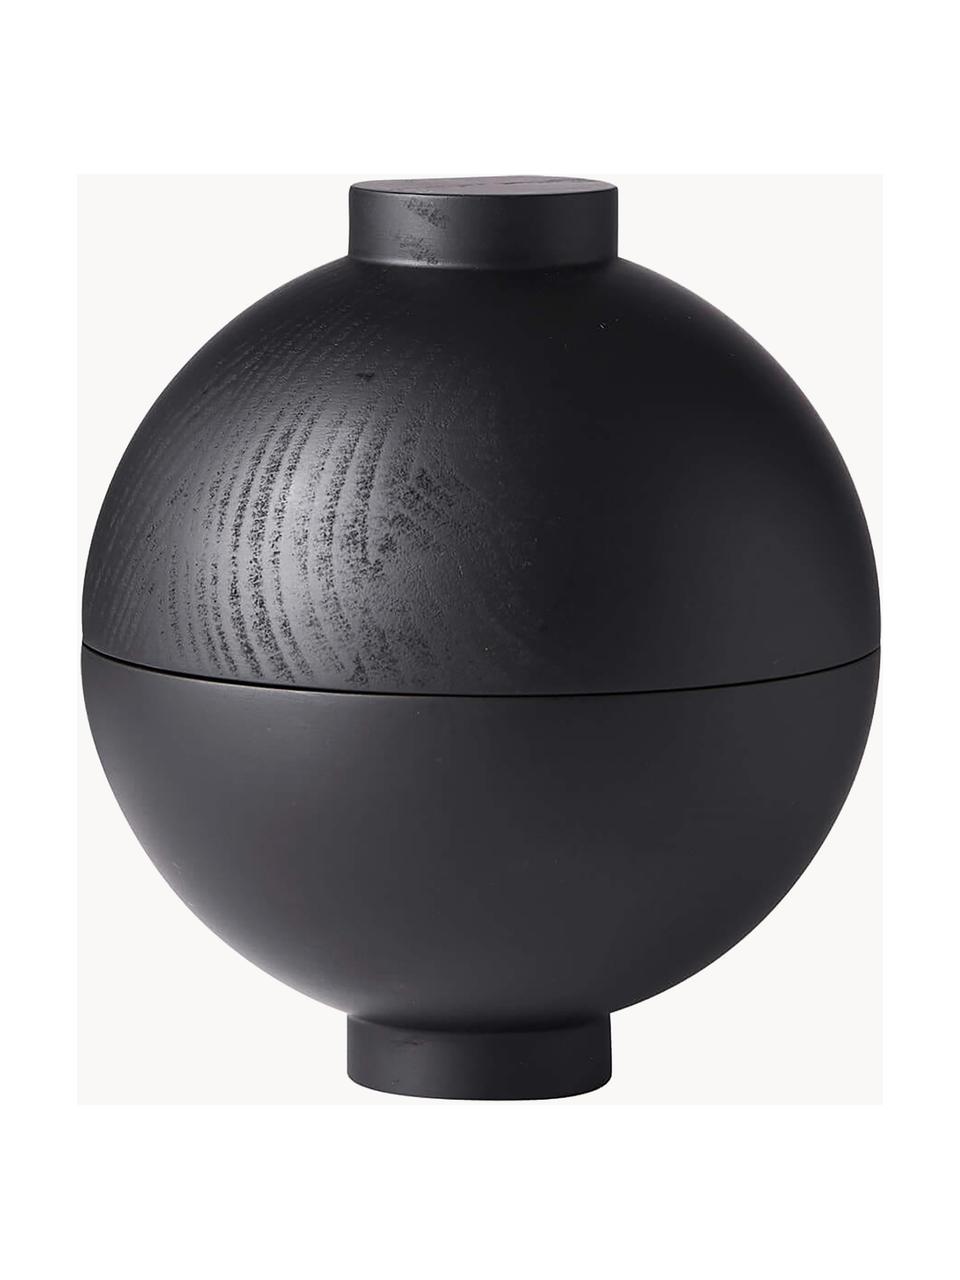 Joyero de madera de roble Wooden Sphere, Madera de roble con certificado FSC, Negro, Ø 16 x Al 18 cm